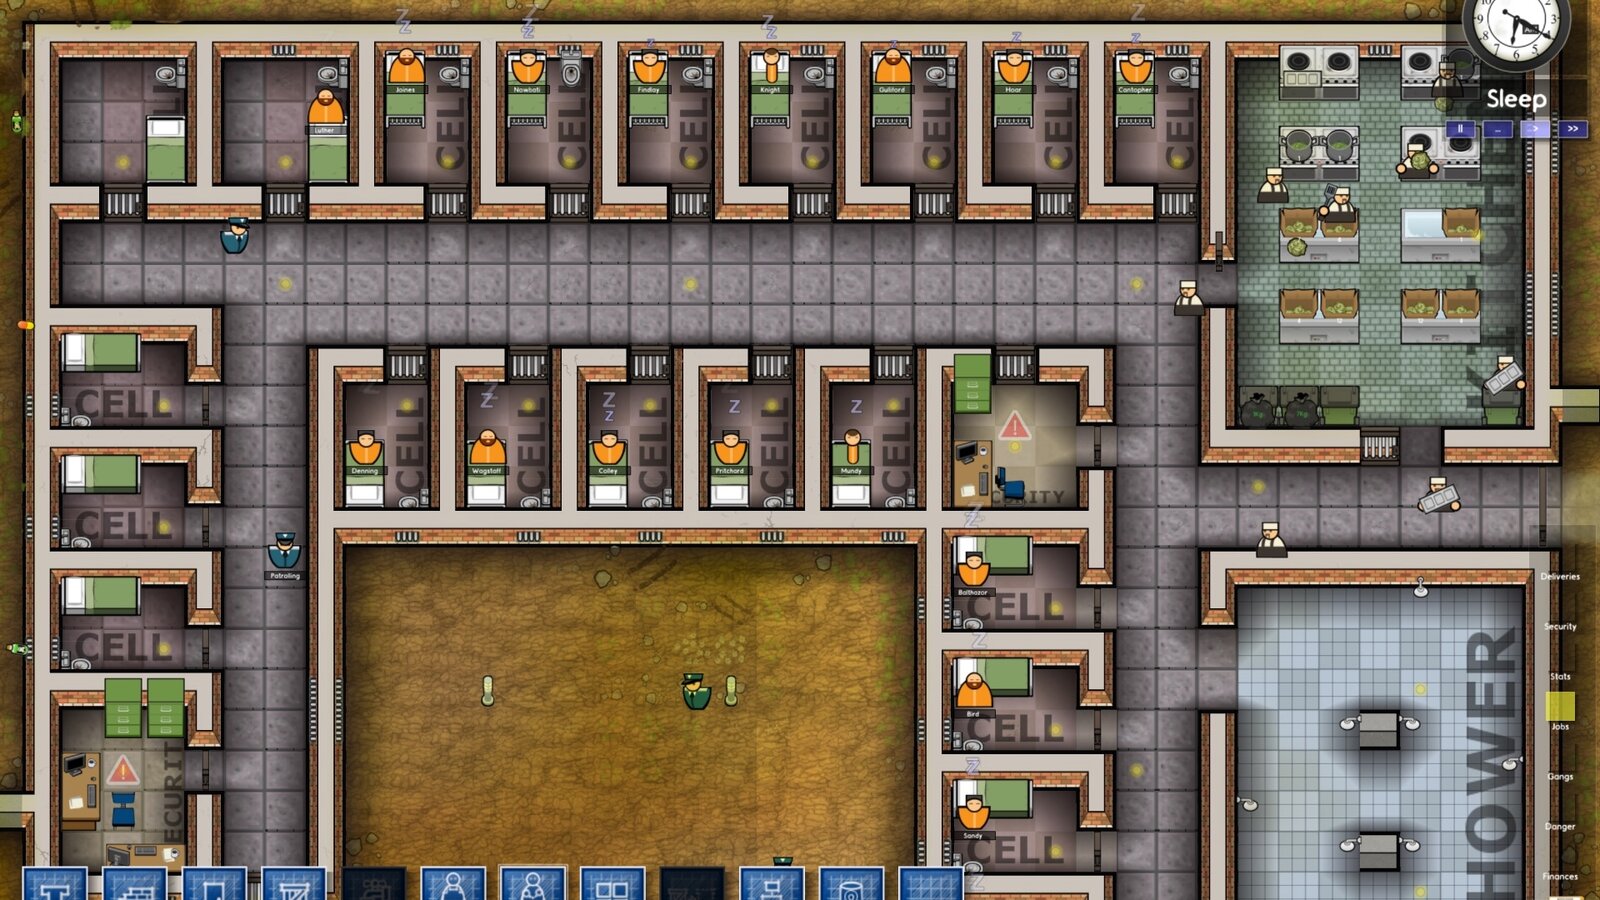 Prison Architect: Aficionado